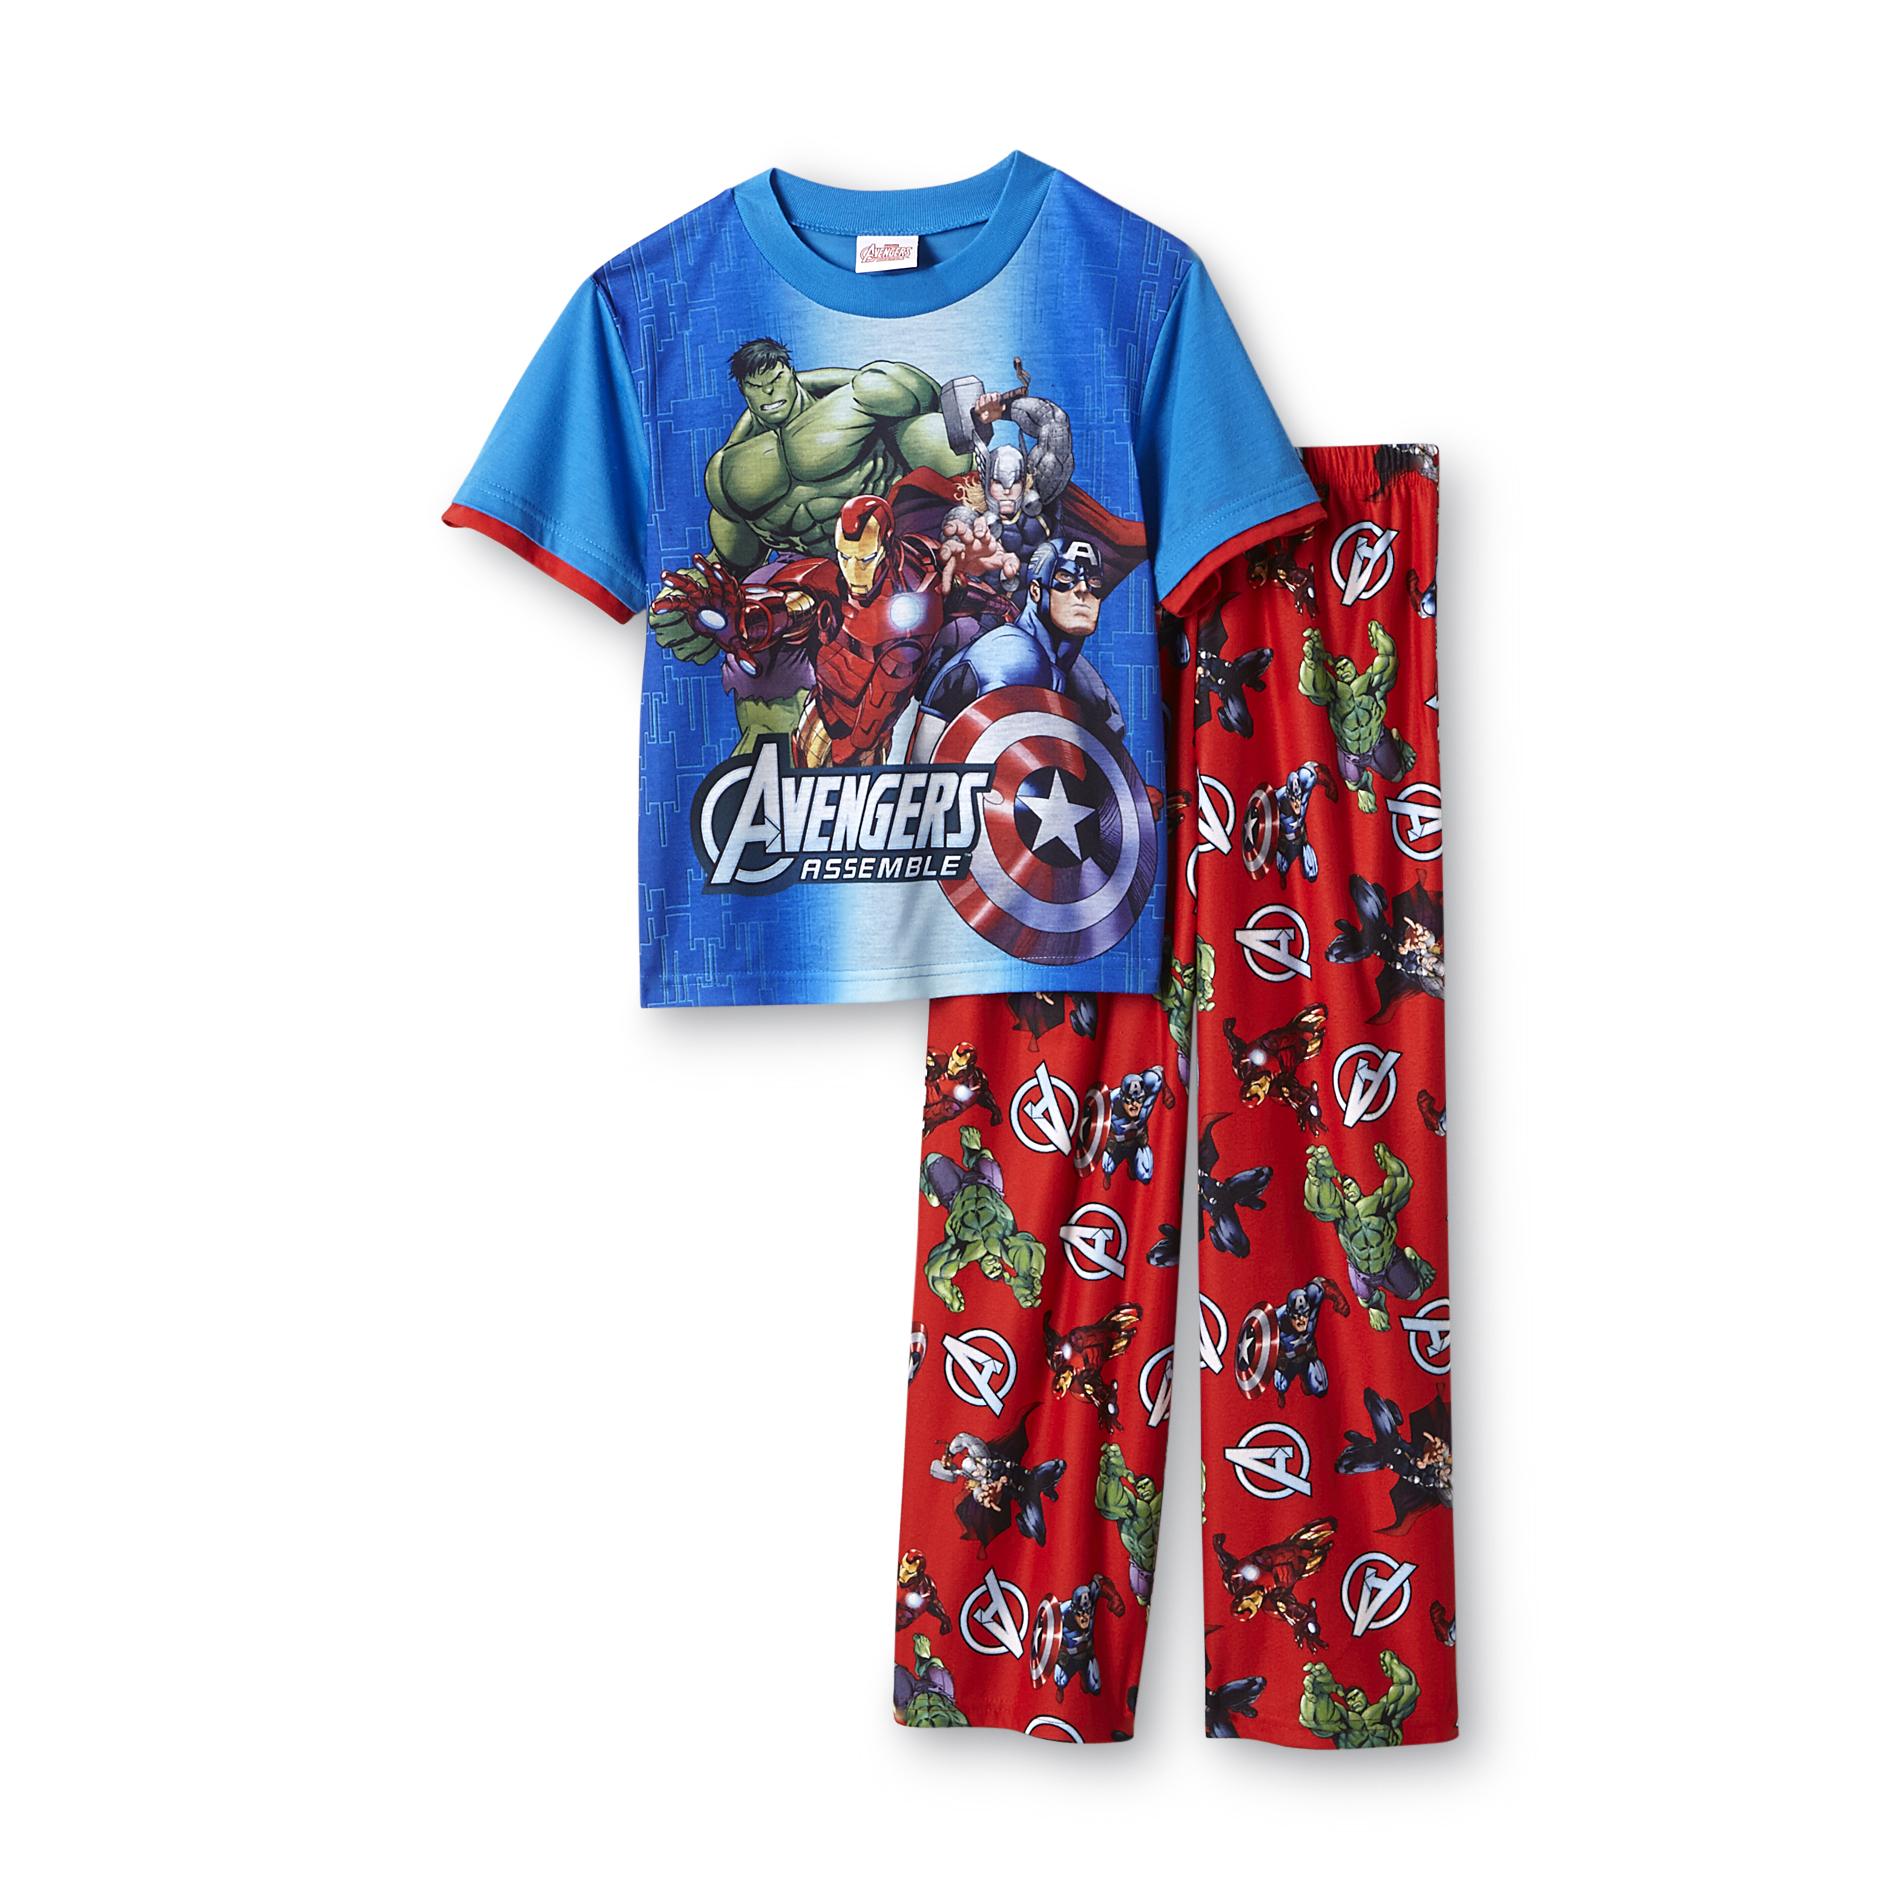 Marvel Avengers Assemble Boy's Pajama Top & Pants